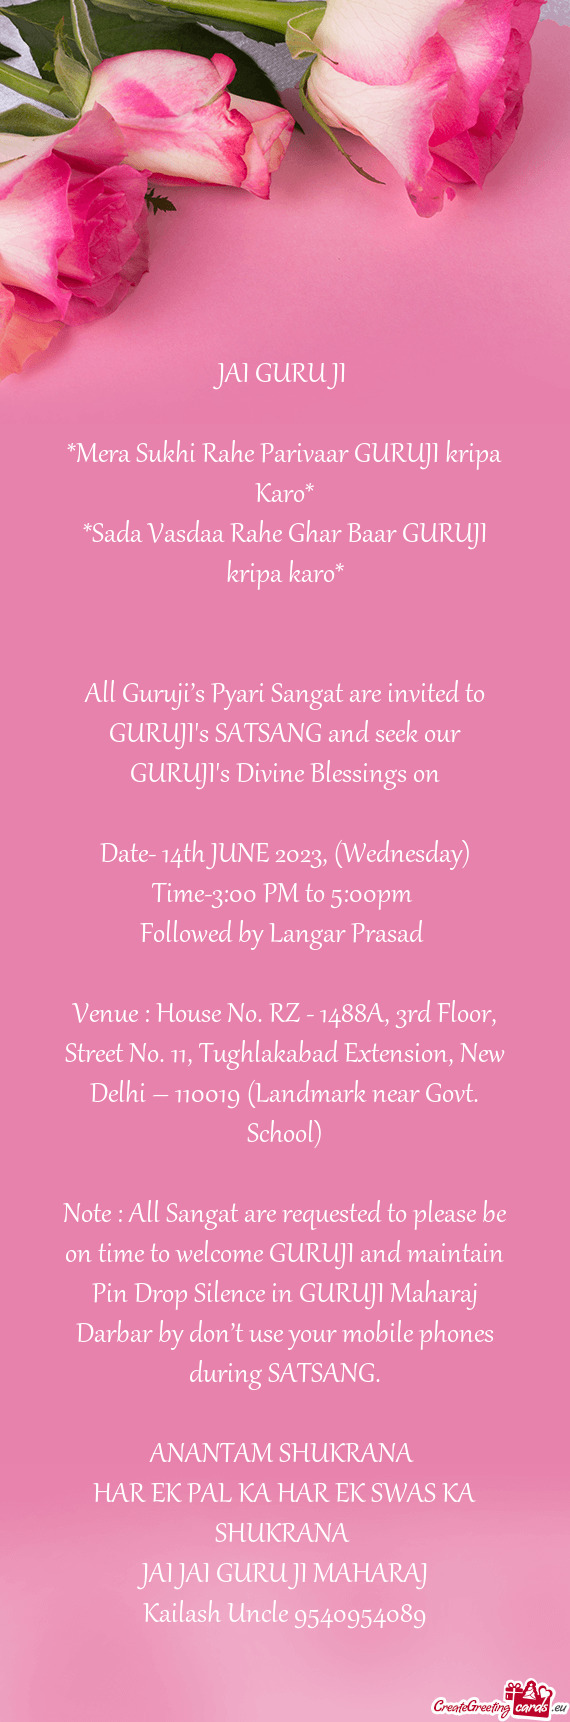 All Guruji’s Pyari Sangat are invited to GURUJI